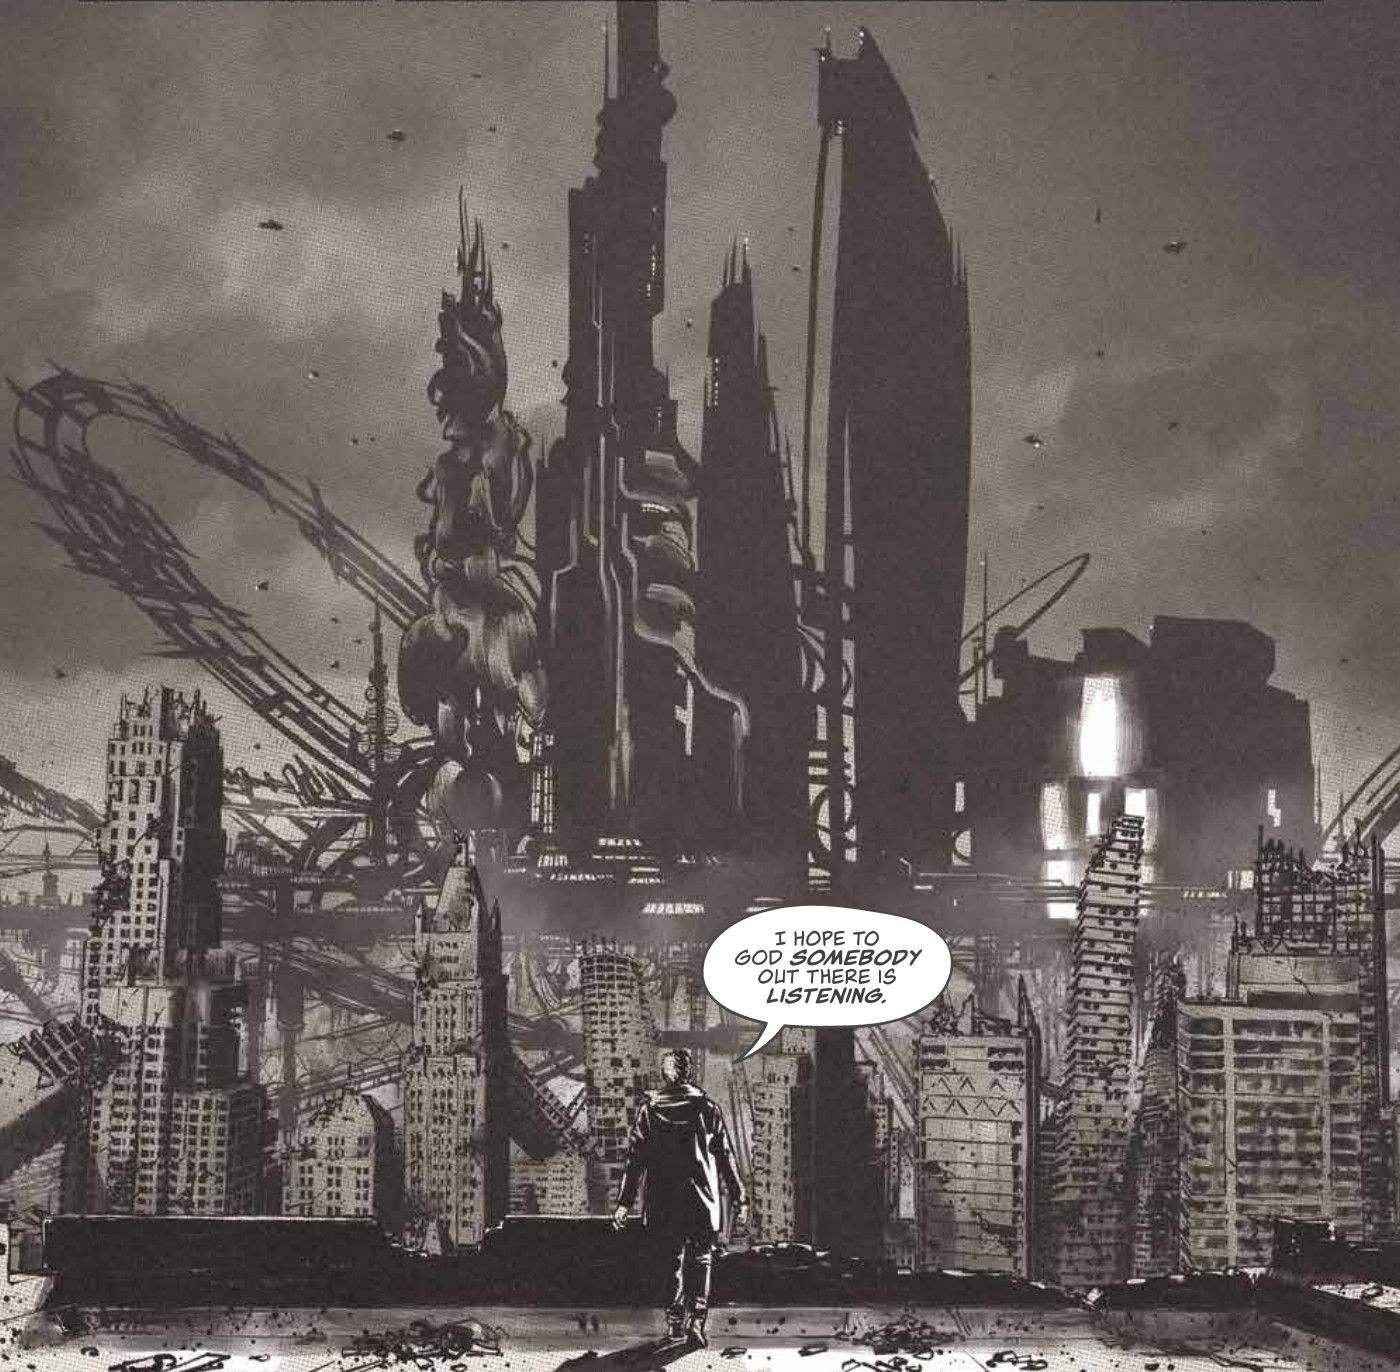 Image Comics' W0rldtr33 Vol 1. TP showing a vast urban horror landscape